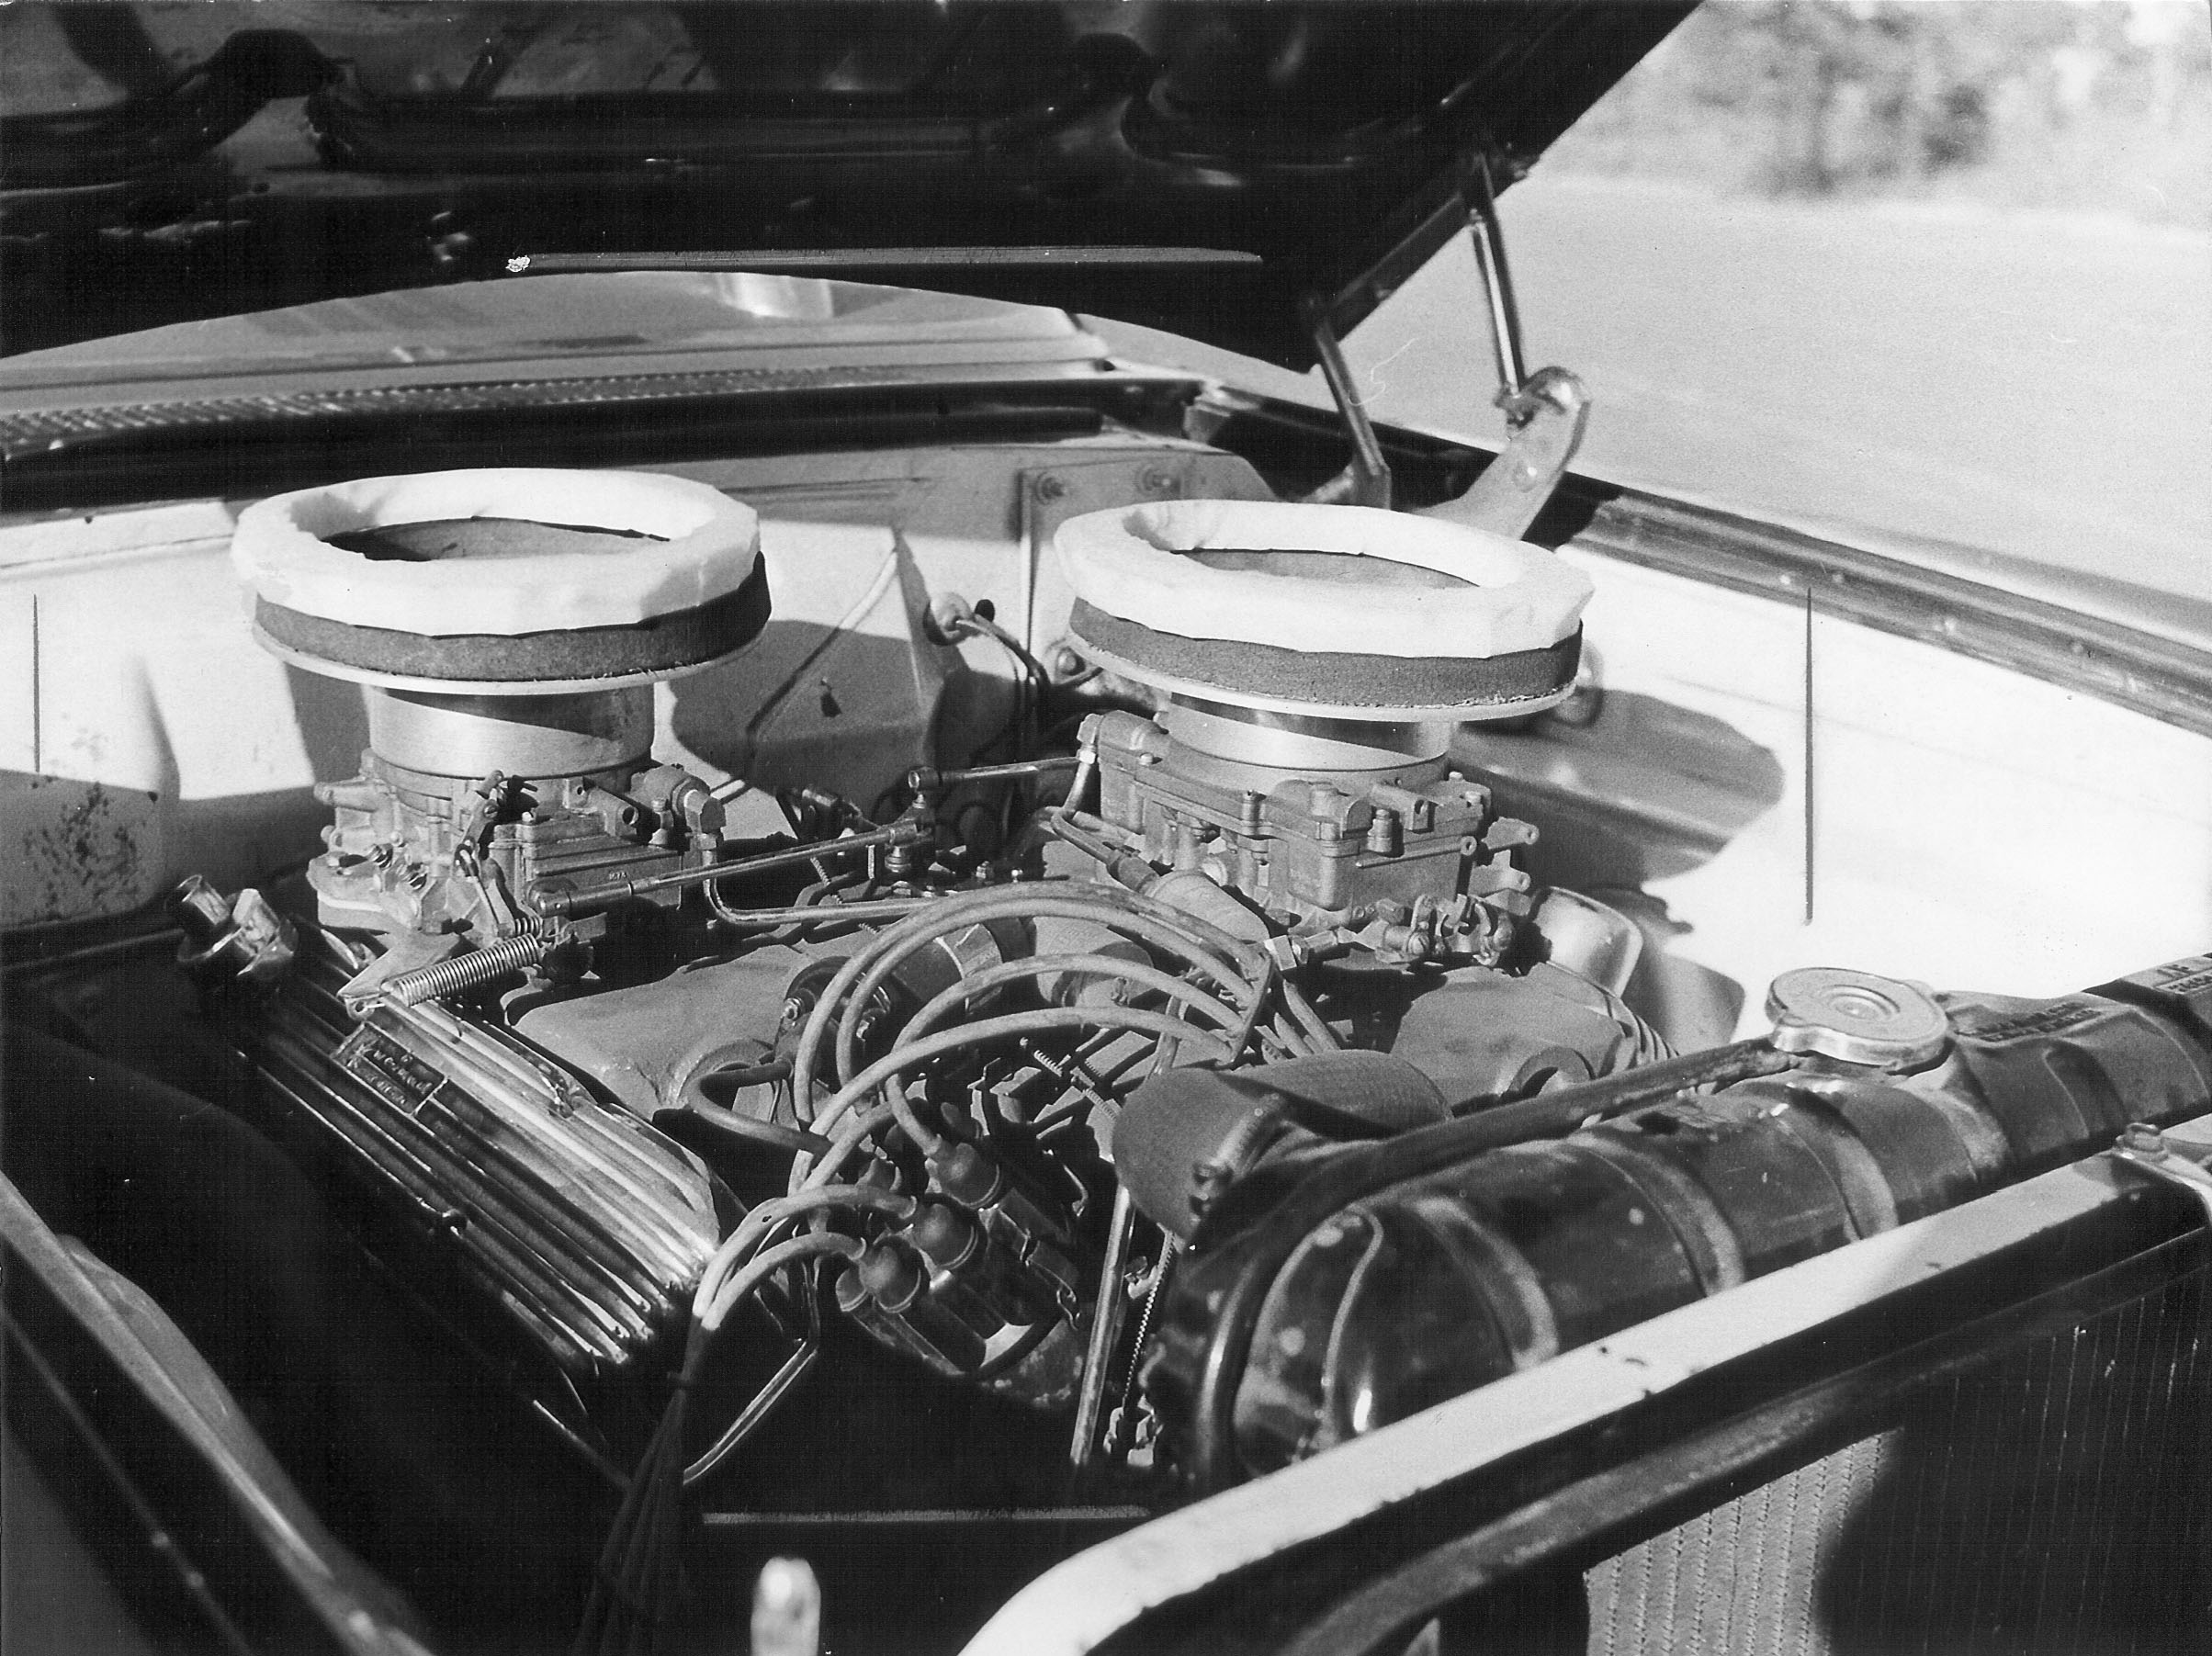 Plymouth Belvedere 426 ci Max Wedge Chrysler engine Australian Drag Racing